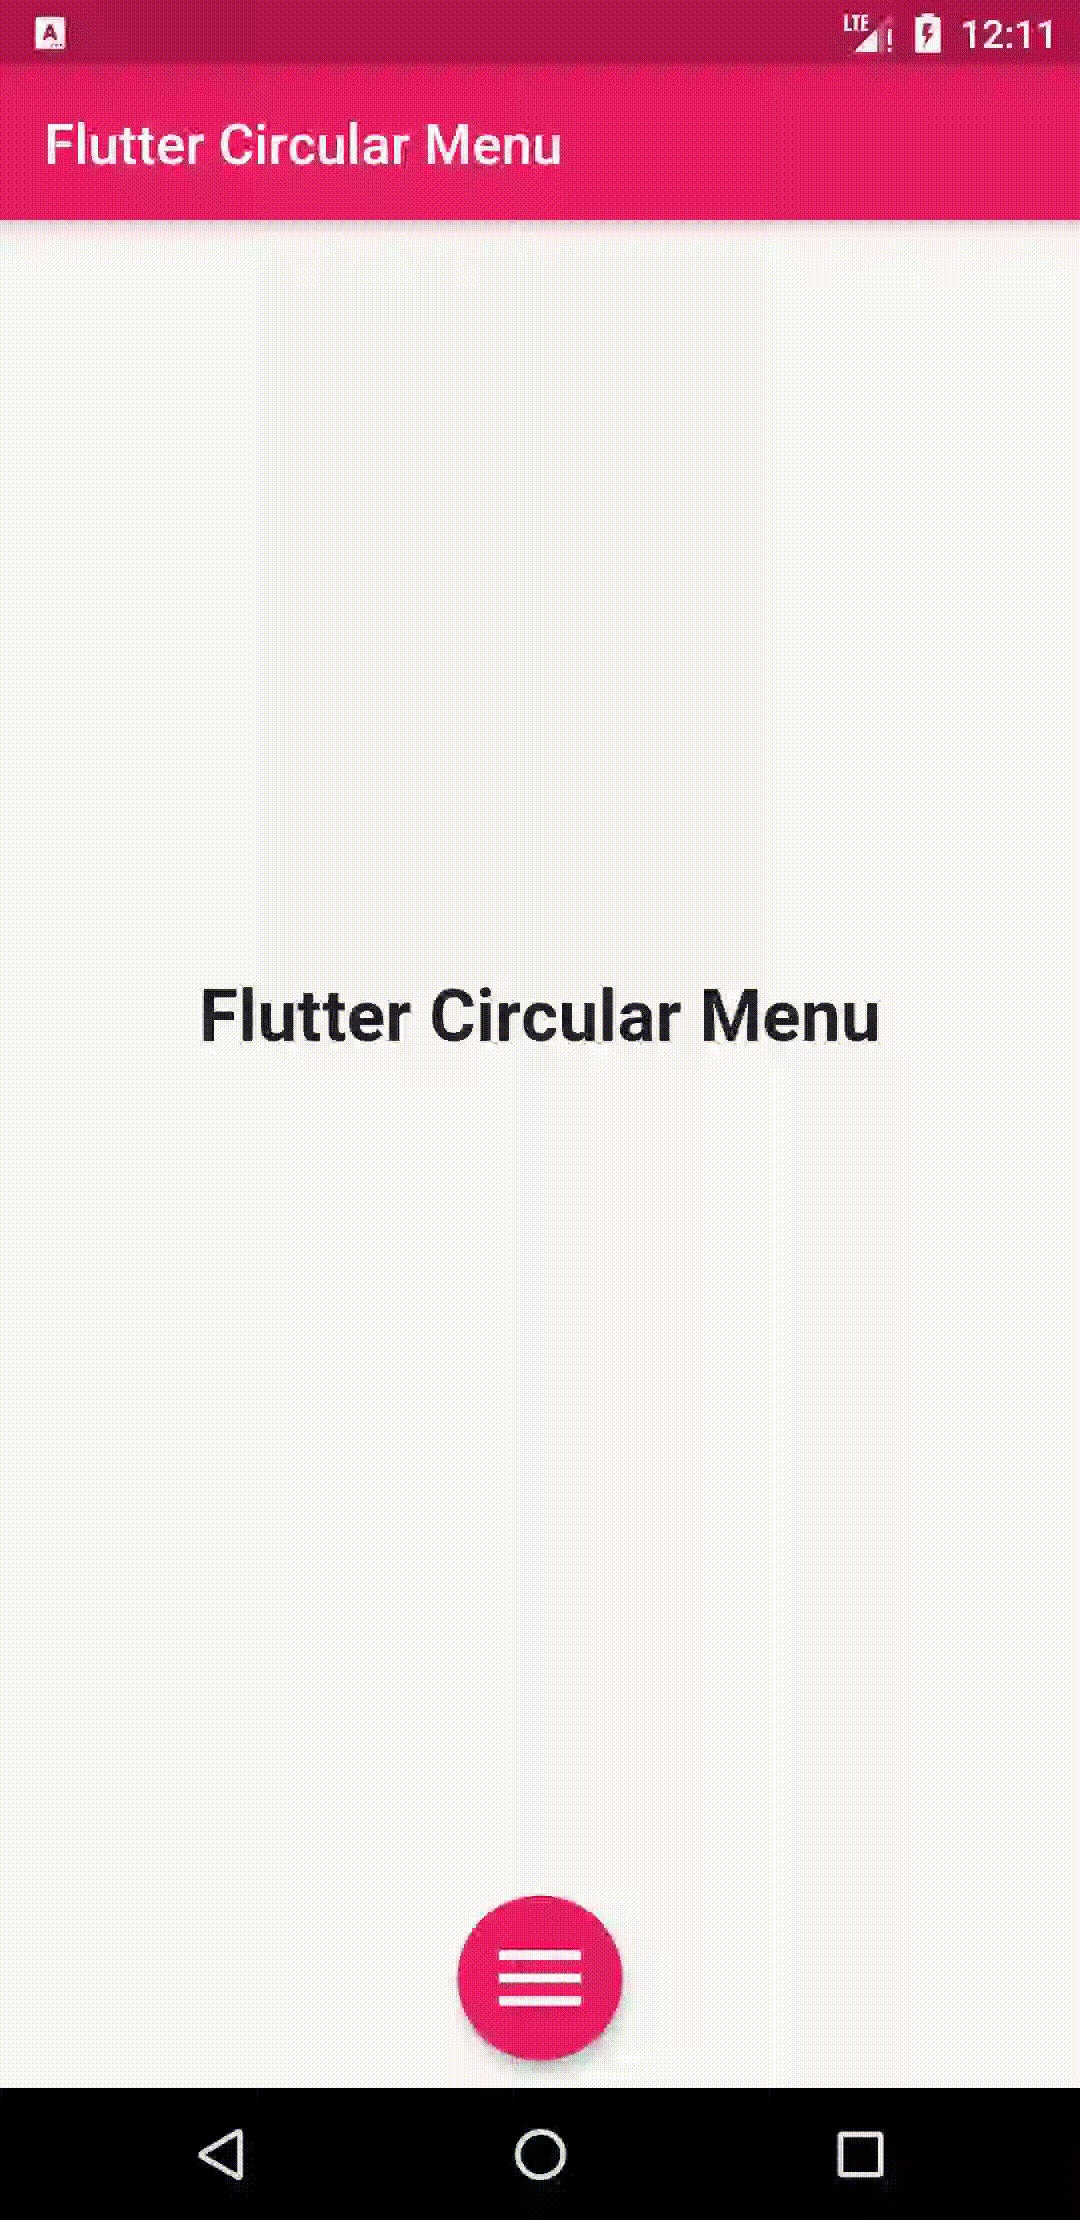 A simple customizable animated circular menu for Flutter